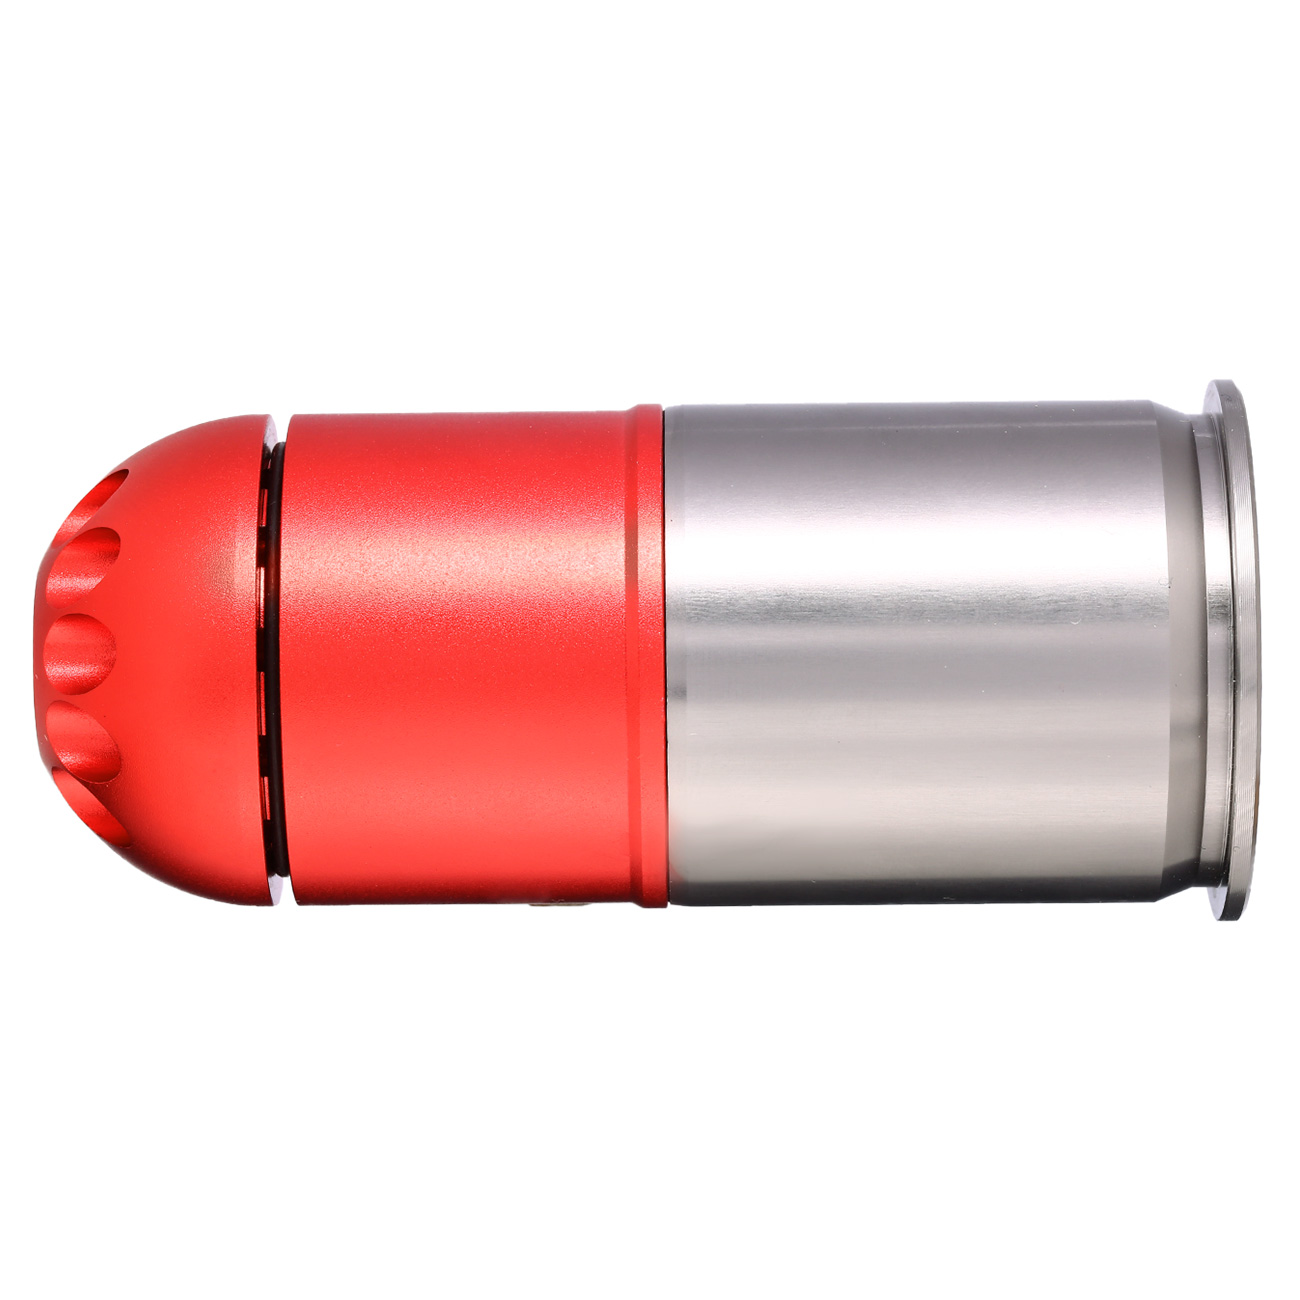 Nuprol 40mm Vollmetall Hlse / Einlegepatrone f. 96 6mm BBs rot Bild 1